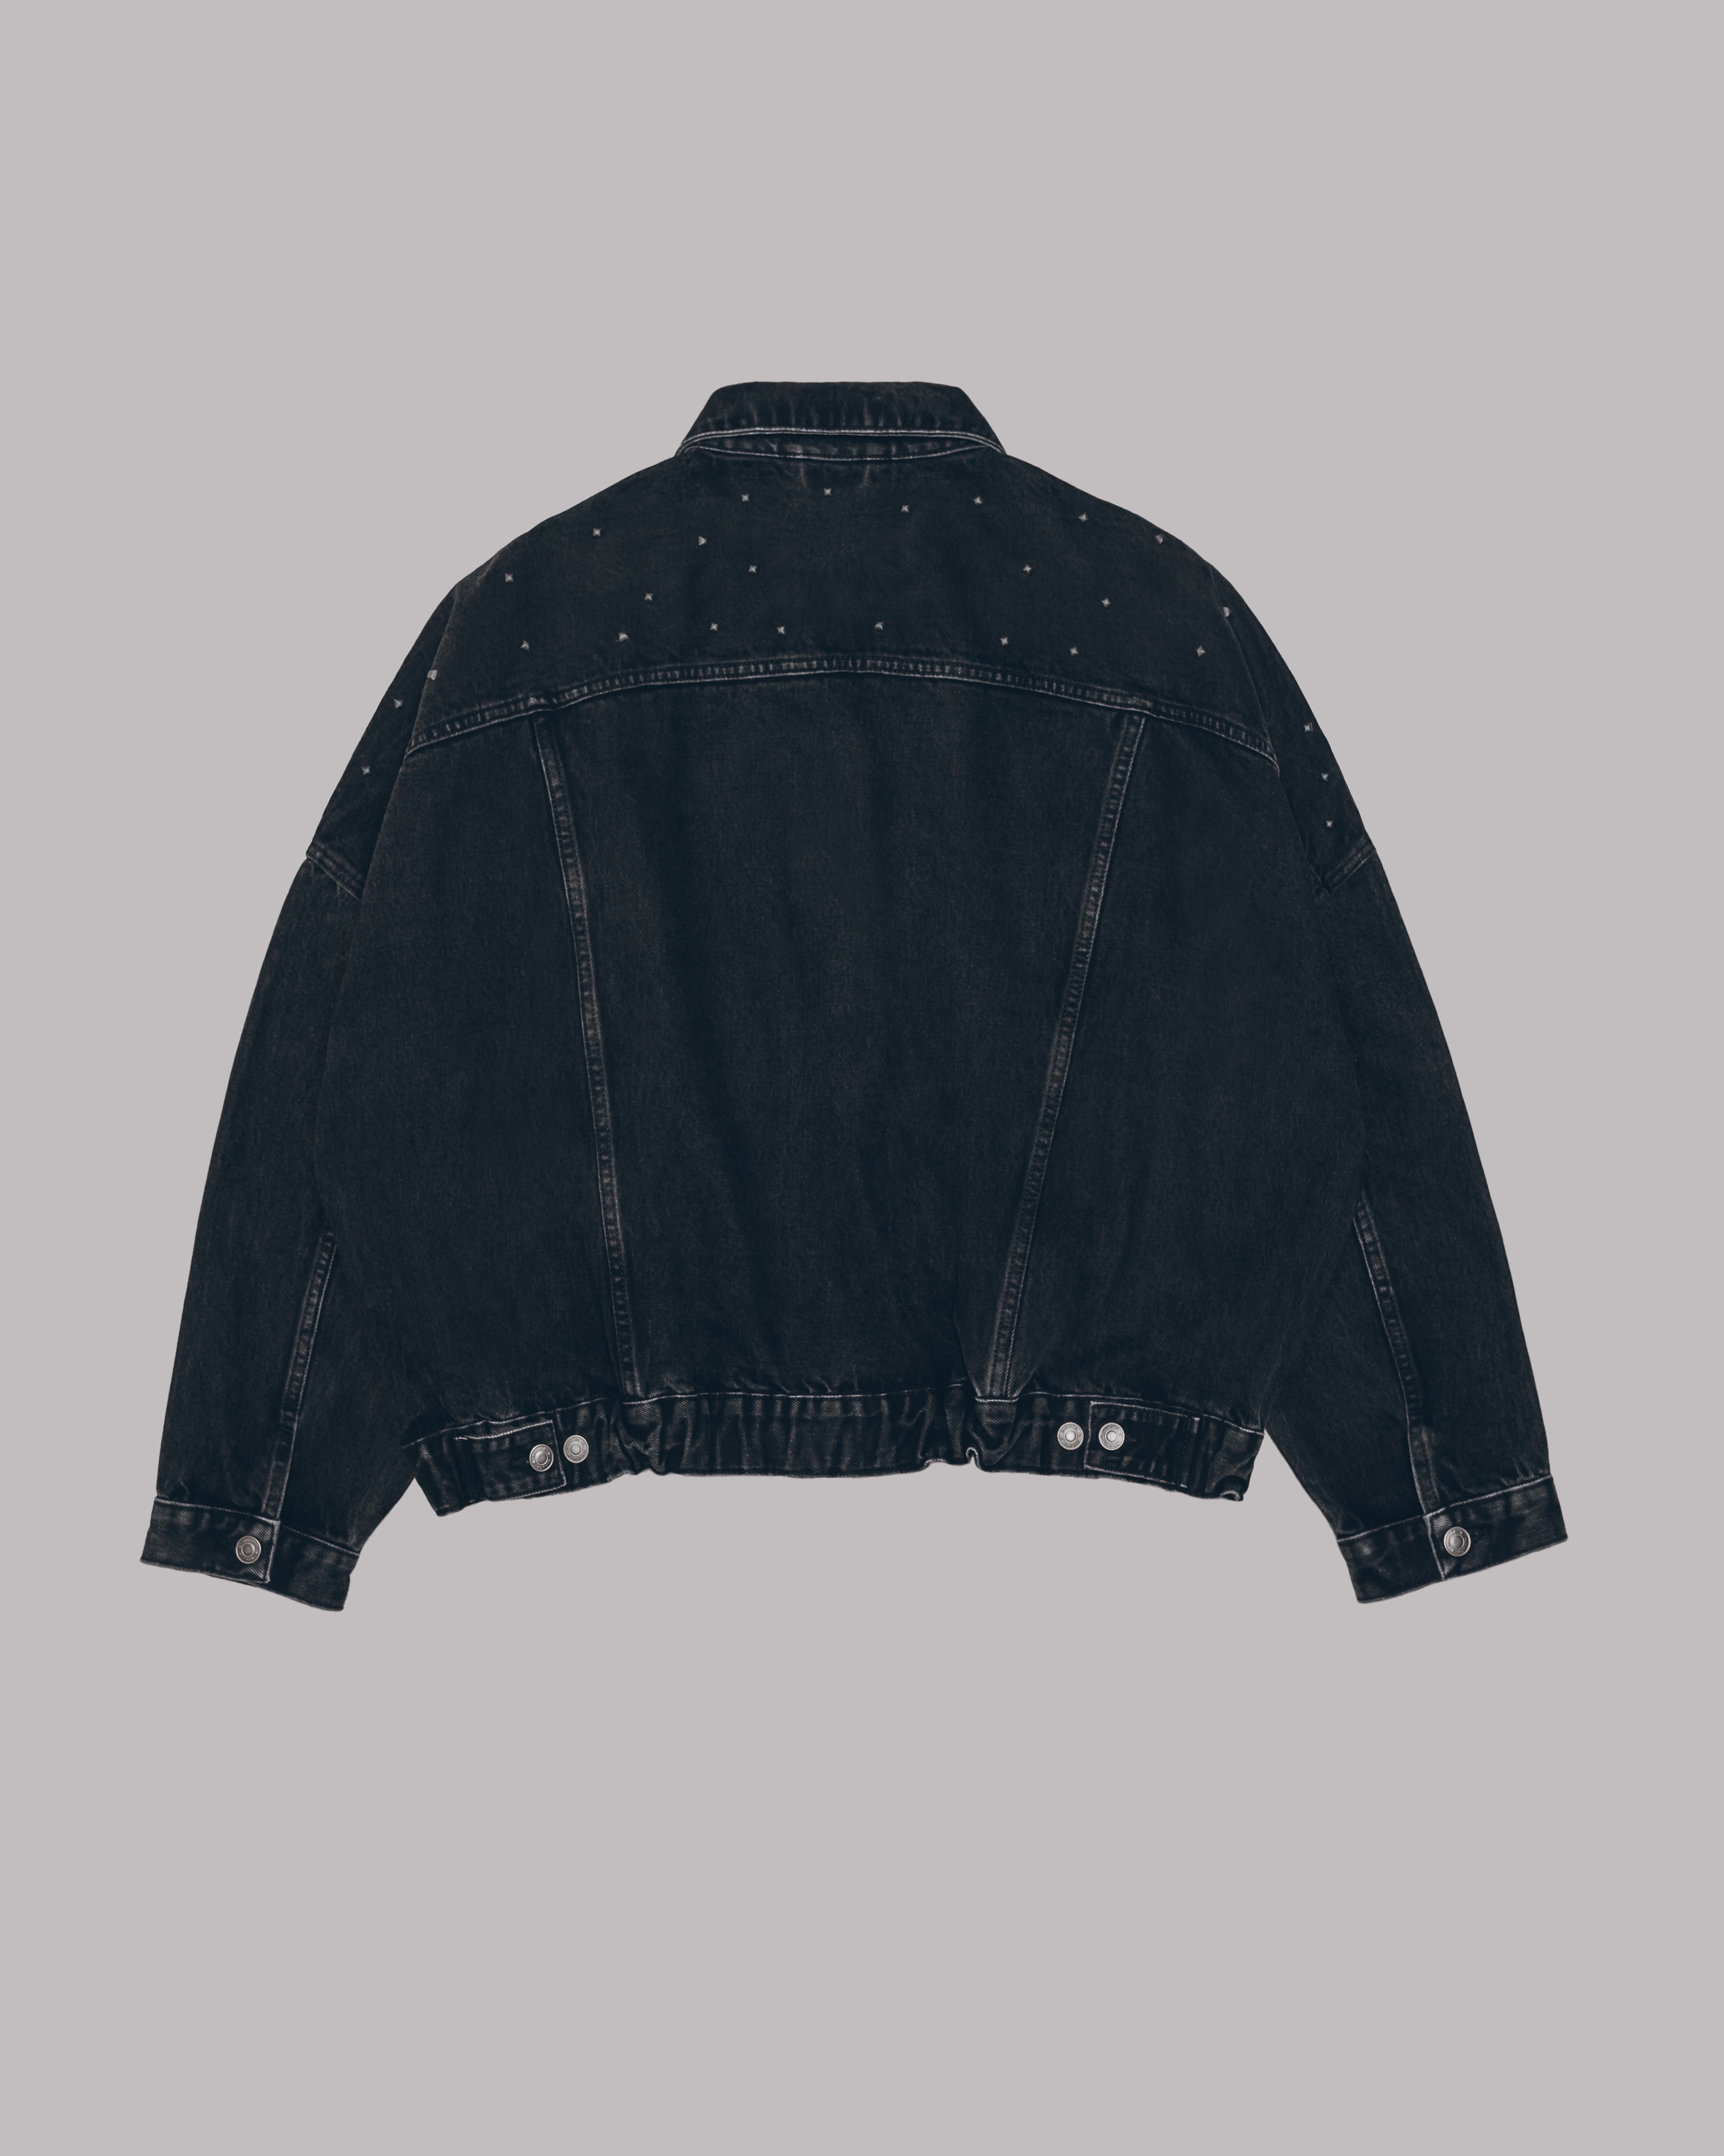 The Black Studded Denim Jacket